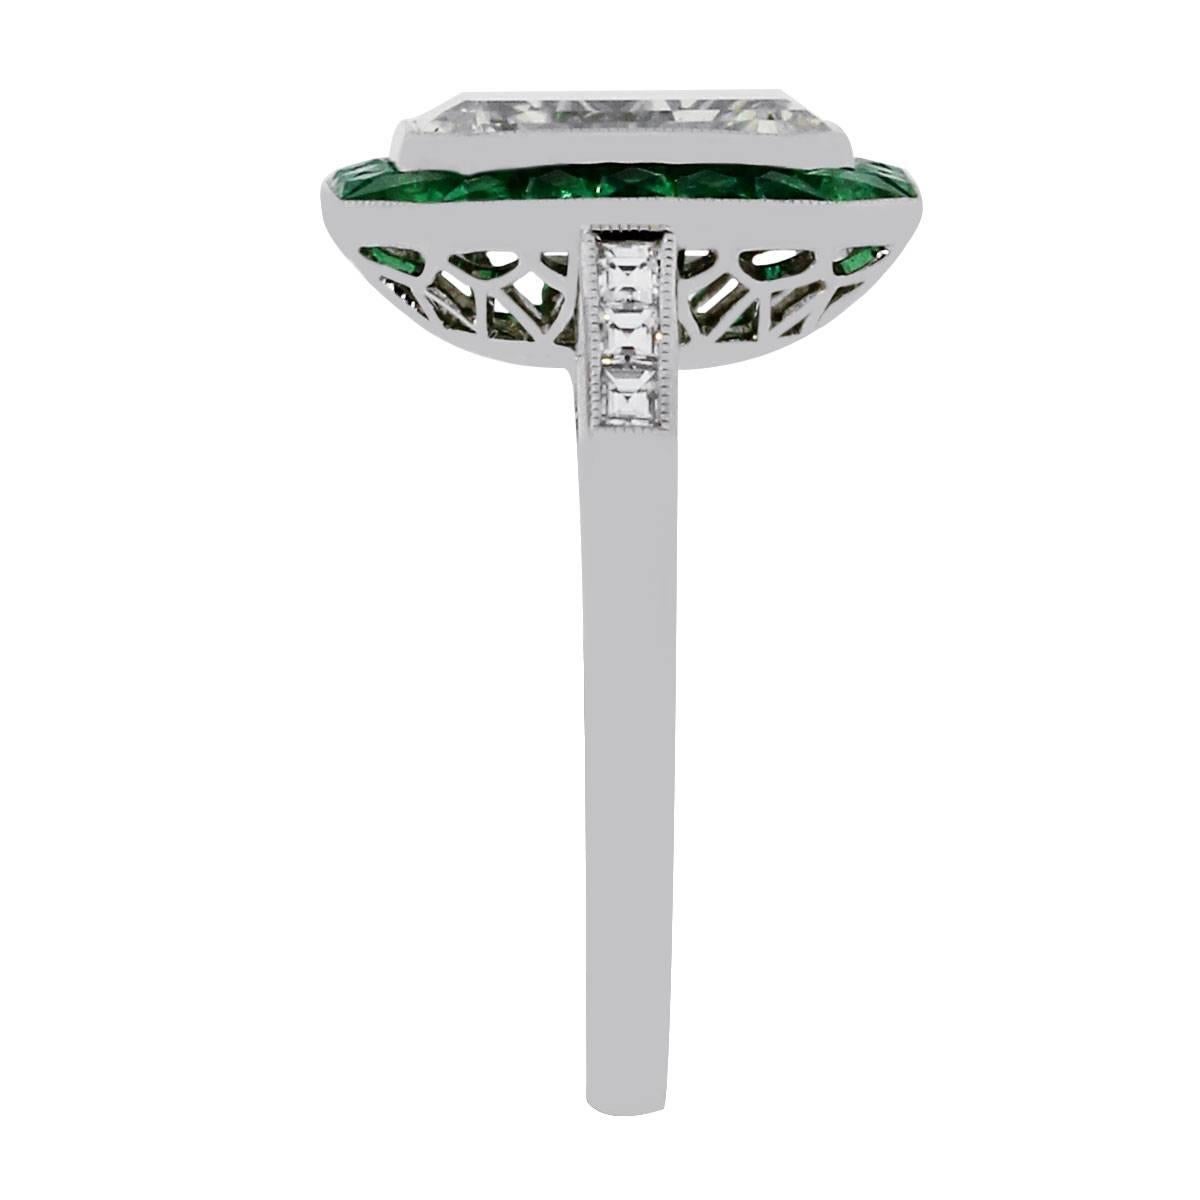 Style: Platinum 3.15ct Diamond Emerald Halo Engagement Ring
Material: Platinum
Center Diamond Details: 3.15 Emerald Cut Diamond, Diamond is J in color and VS2 in clarity
Mounting Diamond Details: Approximately 0.13ctw of Princess Cut Diamonds,